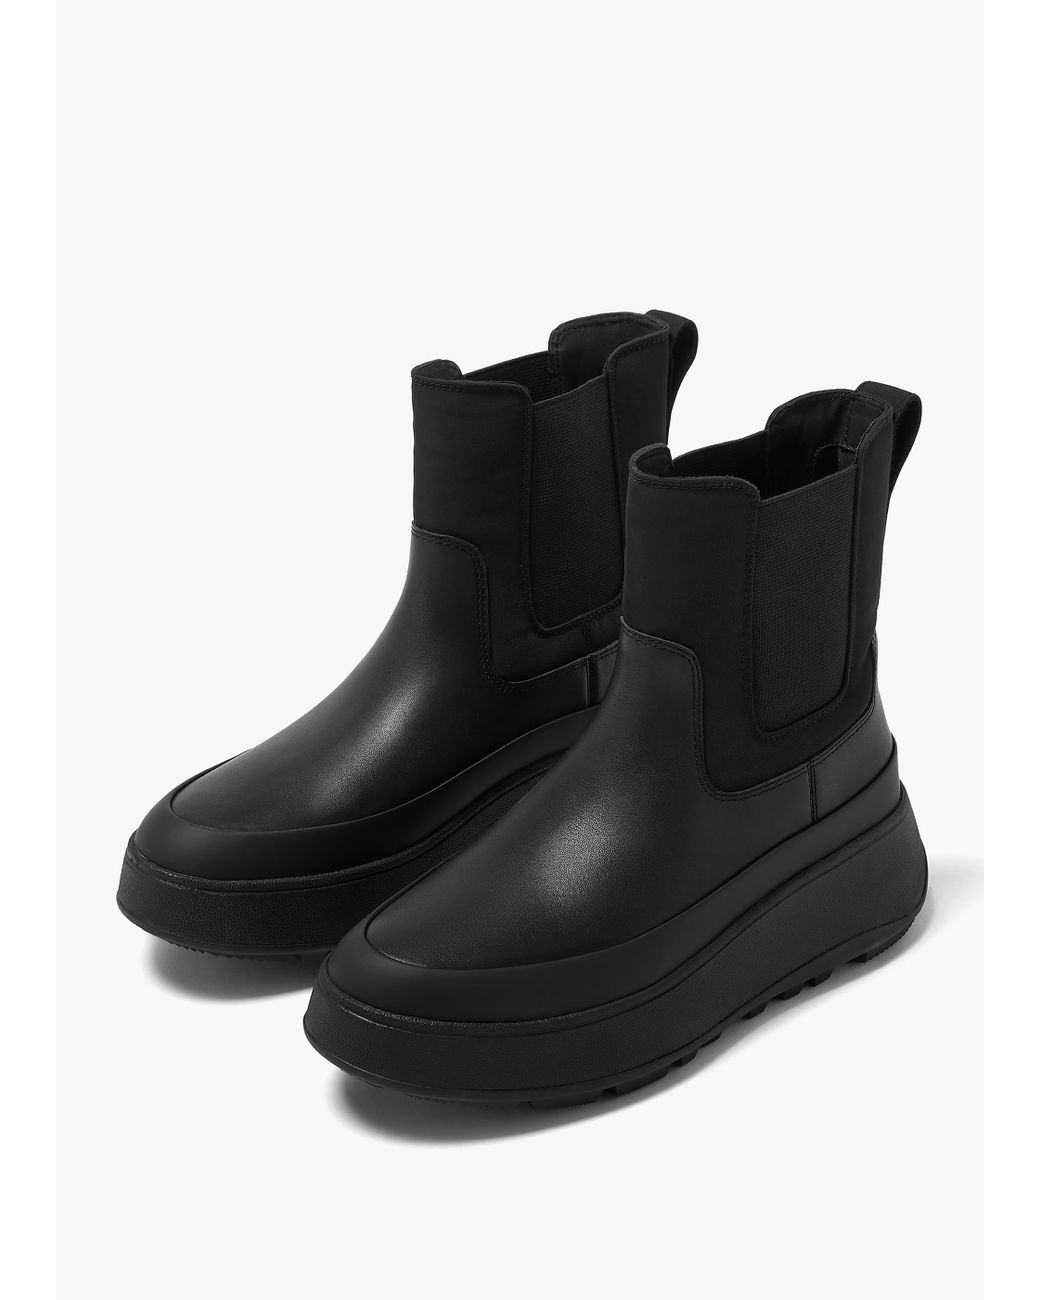 https://cdna.lystit.com/1040/1300/n/photos/danielfootwear/a3b60149/fitflop-Black-Leather-F-mode-Water-resistant-All-Black-Fabric-Leather-Flatform-Chelsea-Boots.jpeg